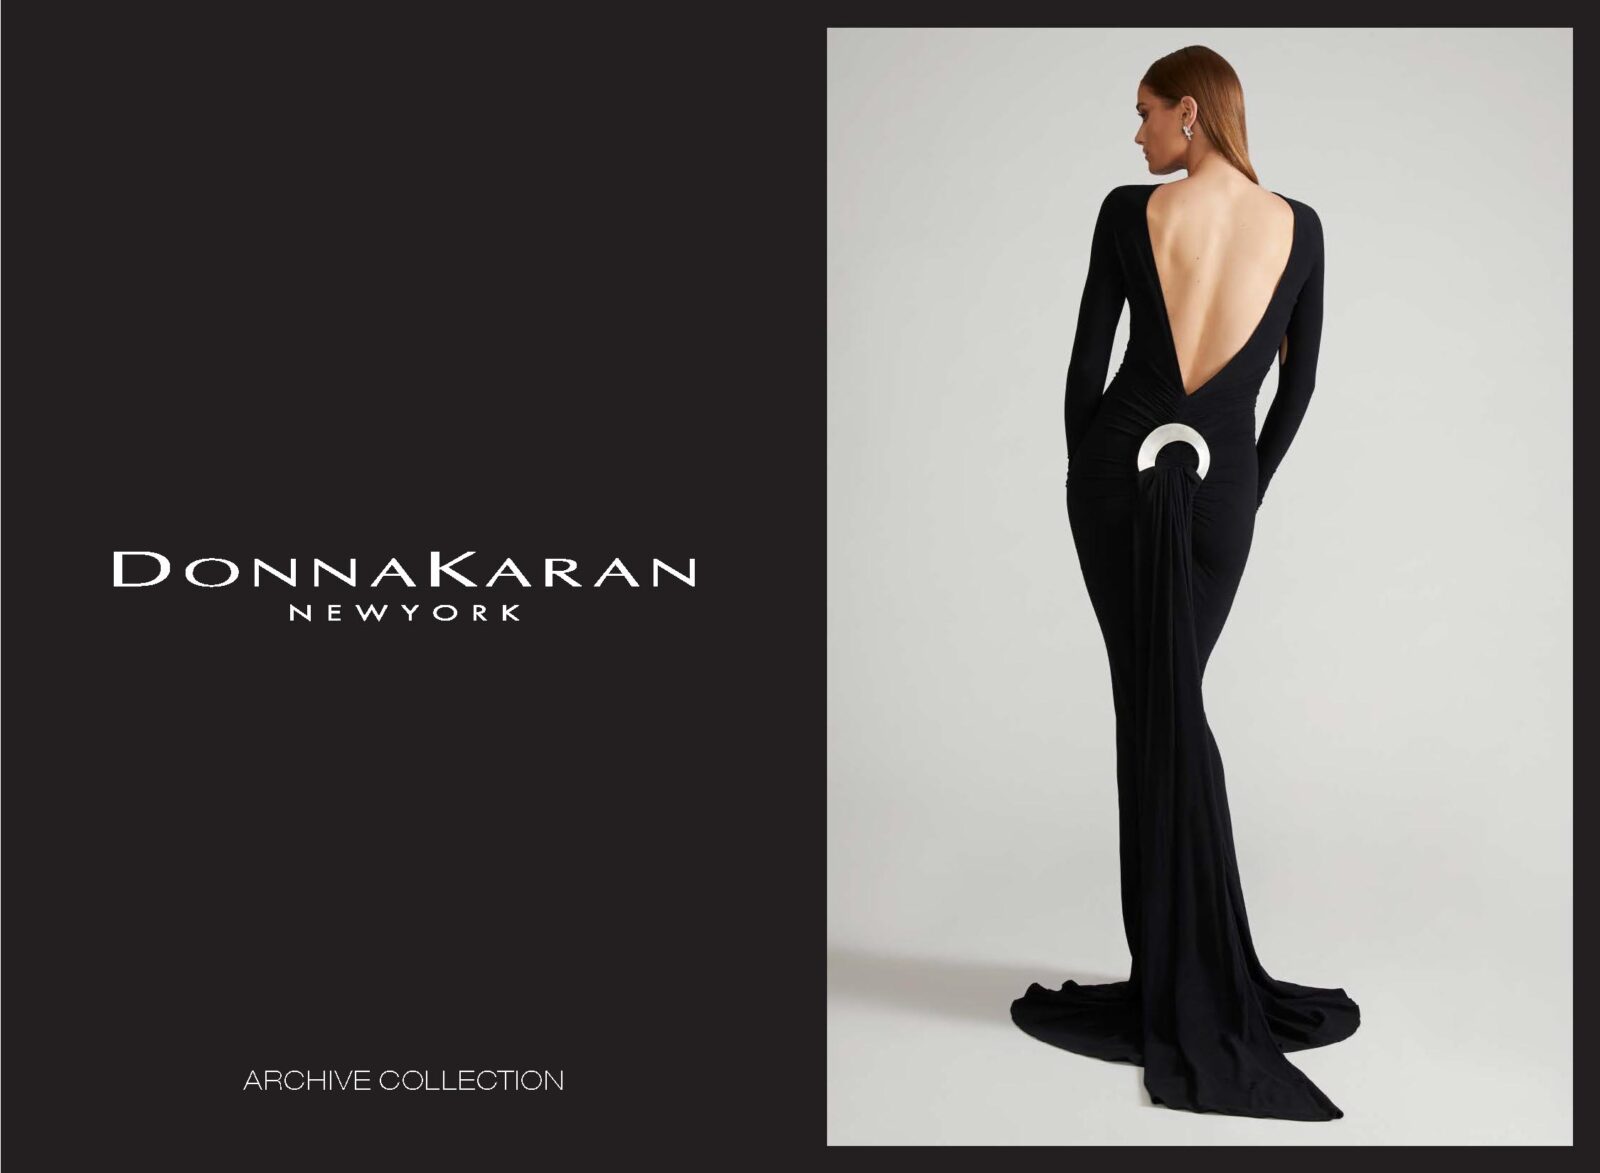 Donna Karan Fashion Advertising I Greg Sorensen I Fashion & Beauty Photographer I NYC